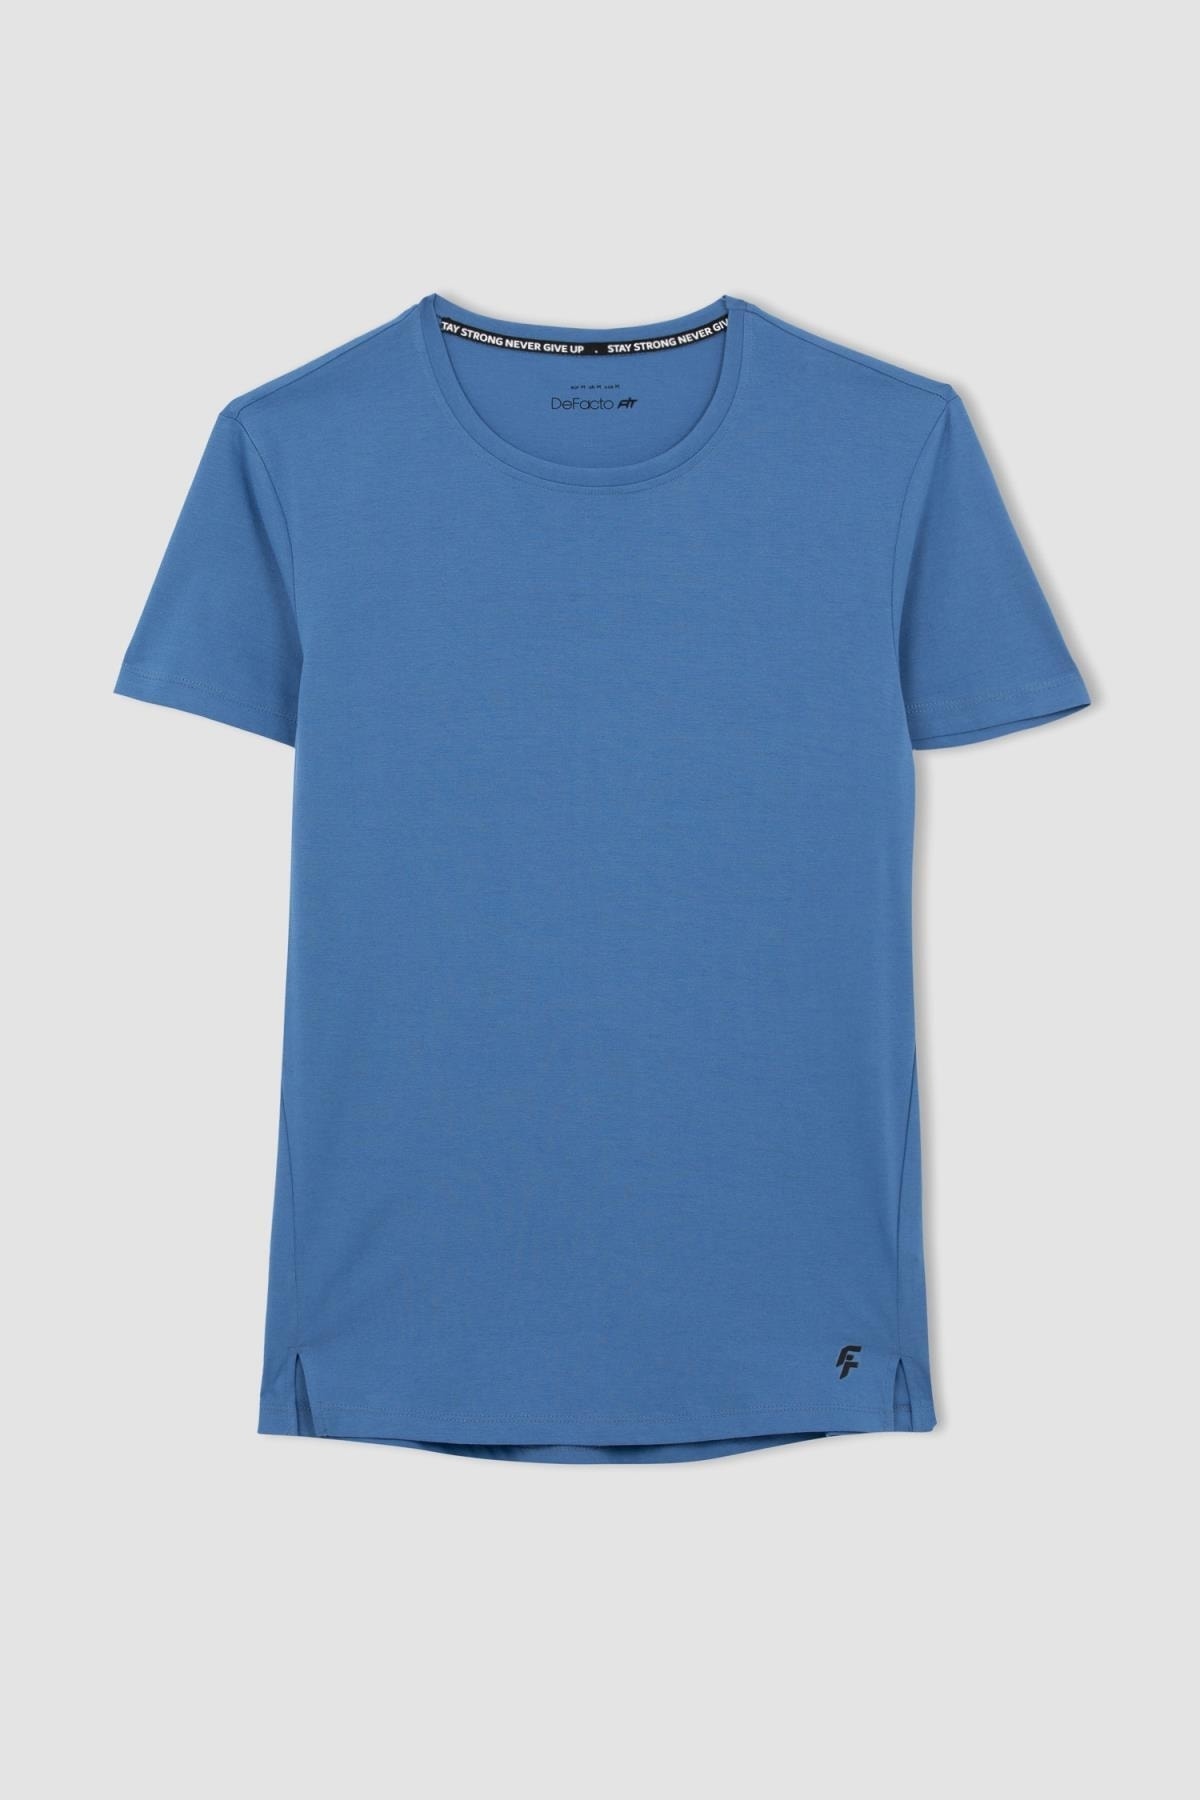 DeFacto T-Shirt Blau Slim Fit